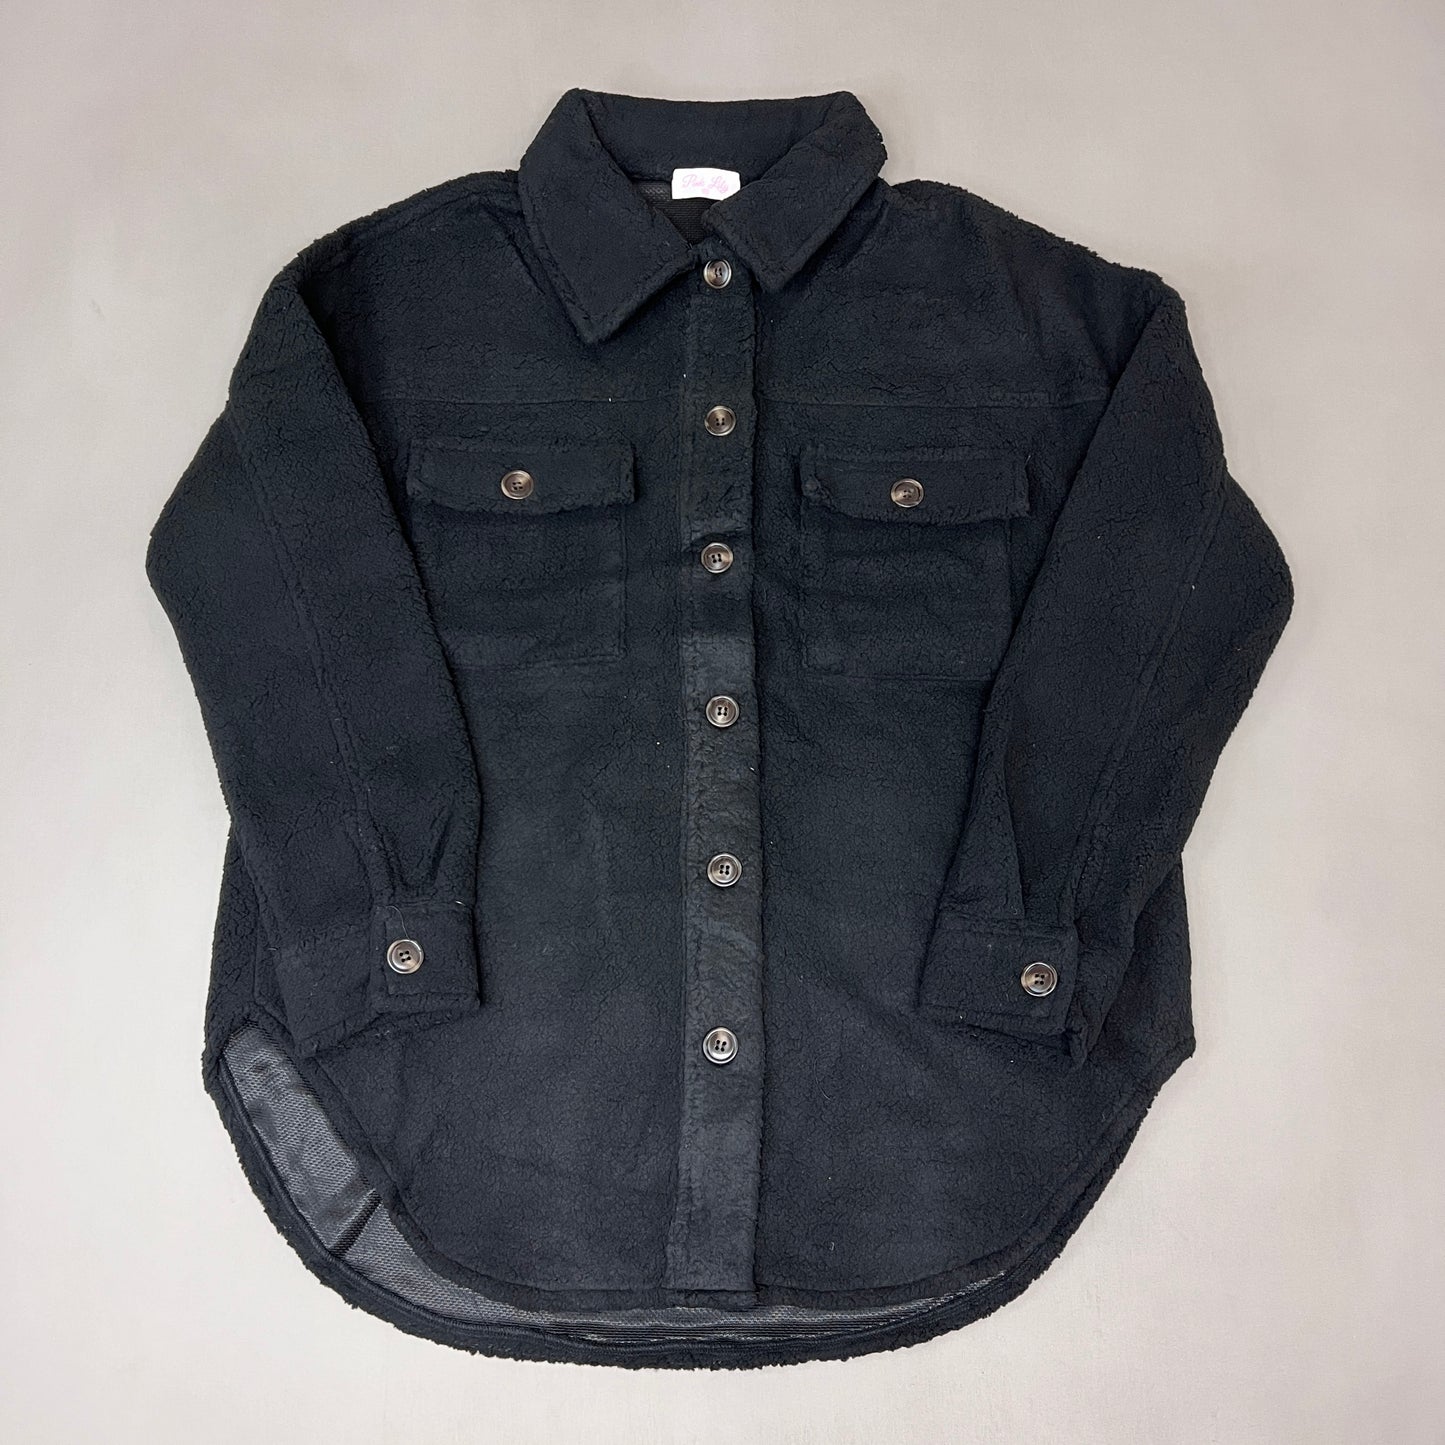 PINK LILY Fleece Button-up Jacket Women's Sz XS Black PL177 (New)